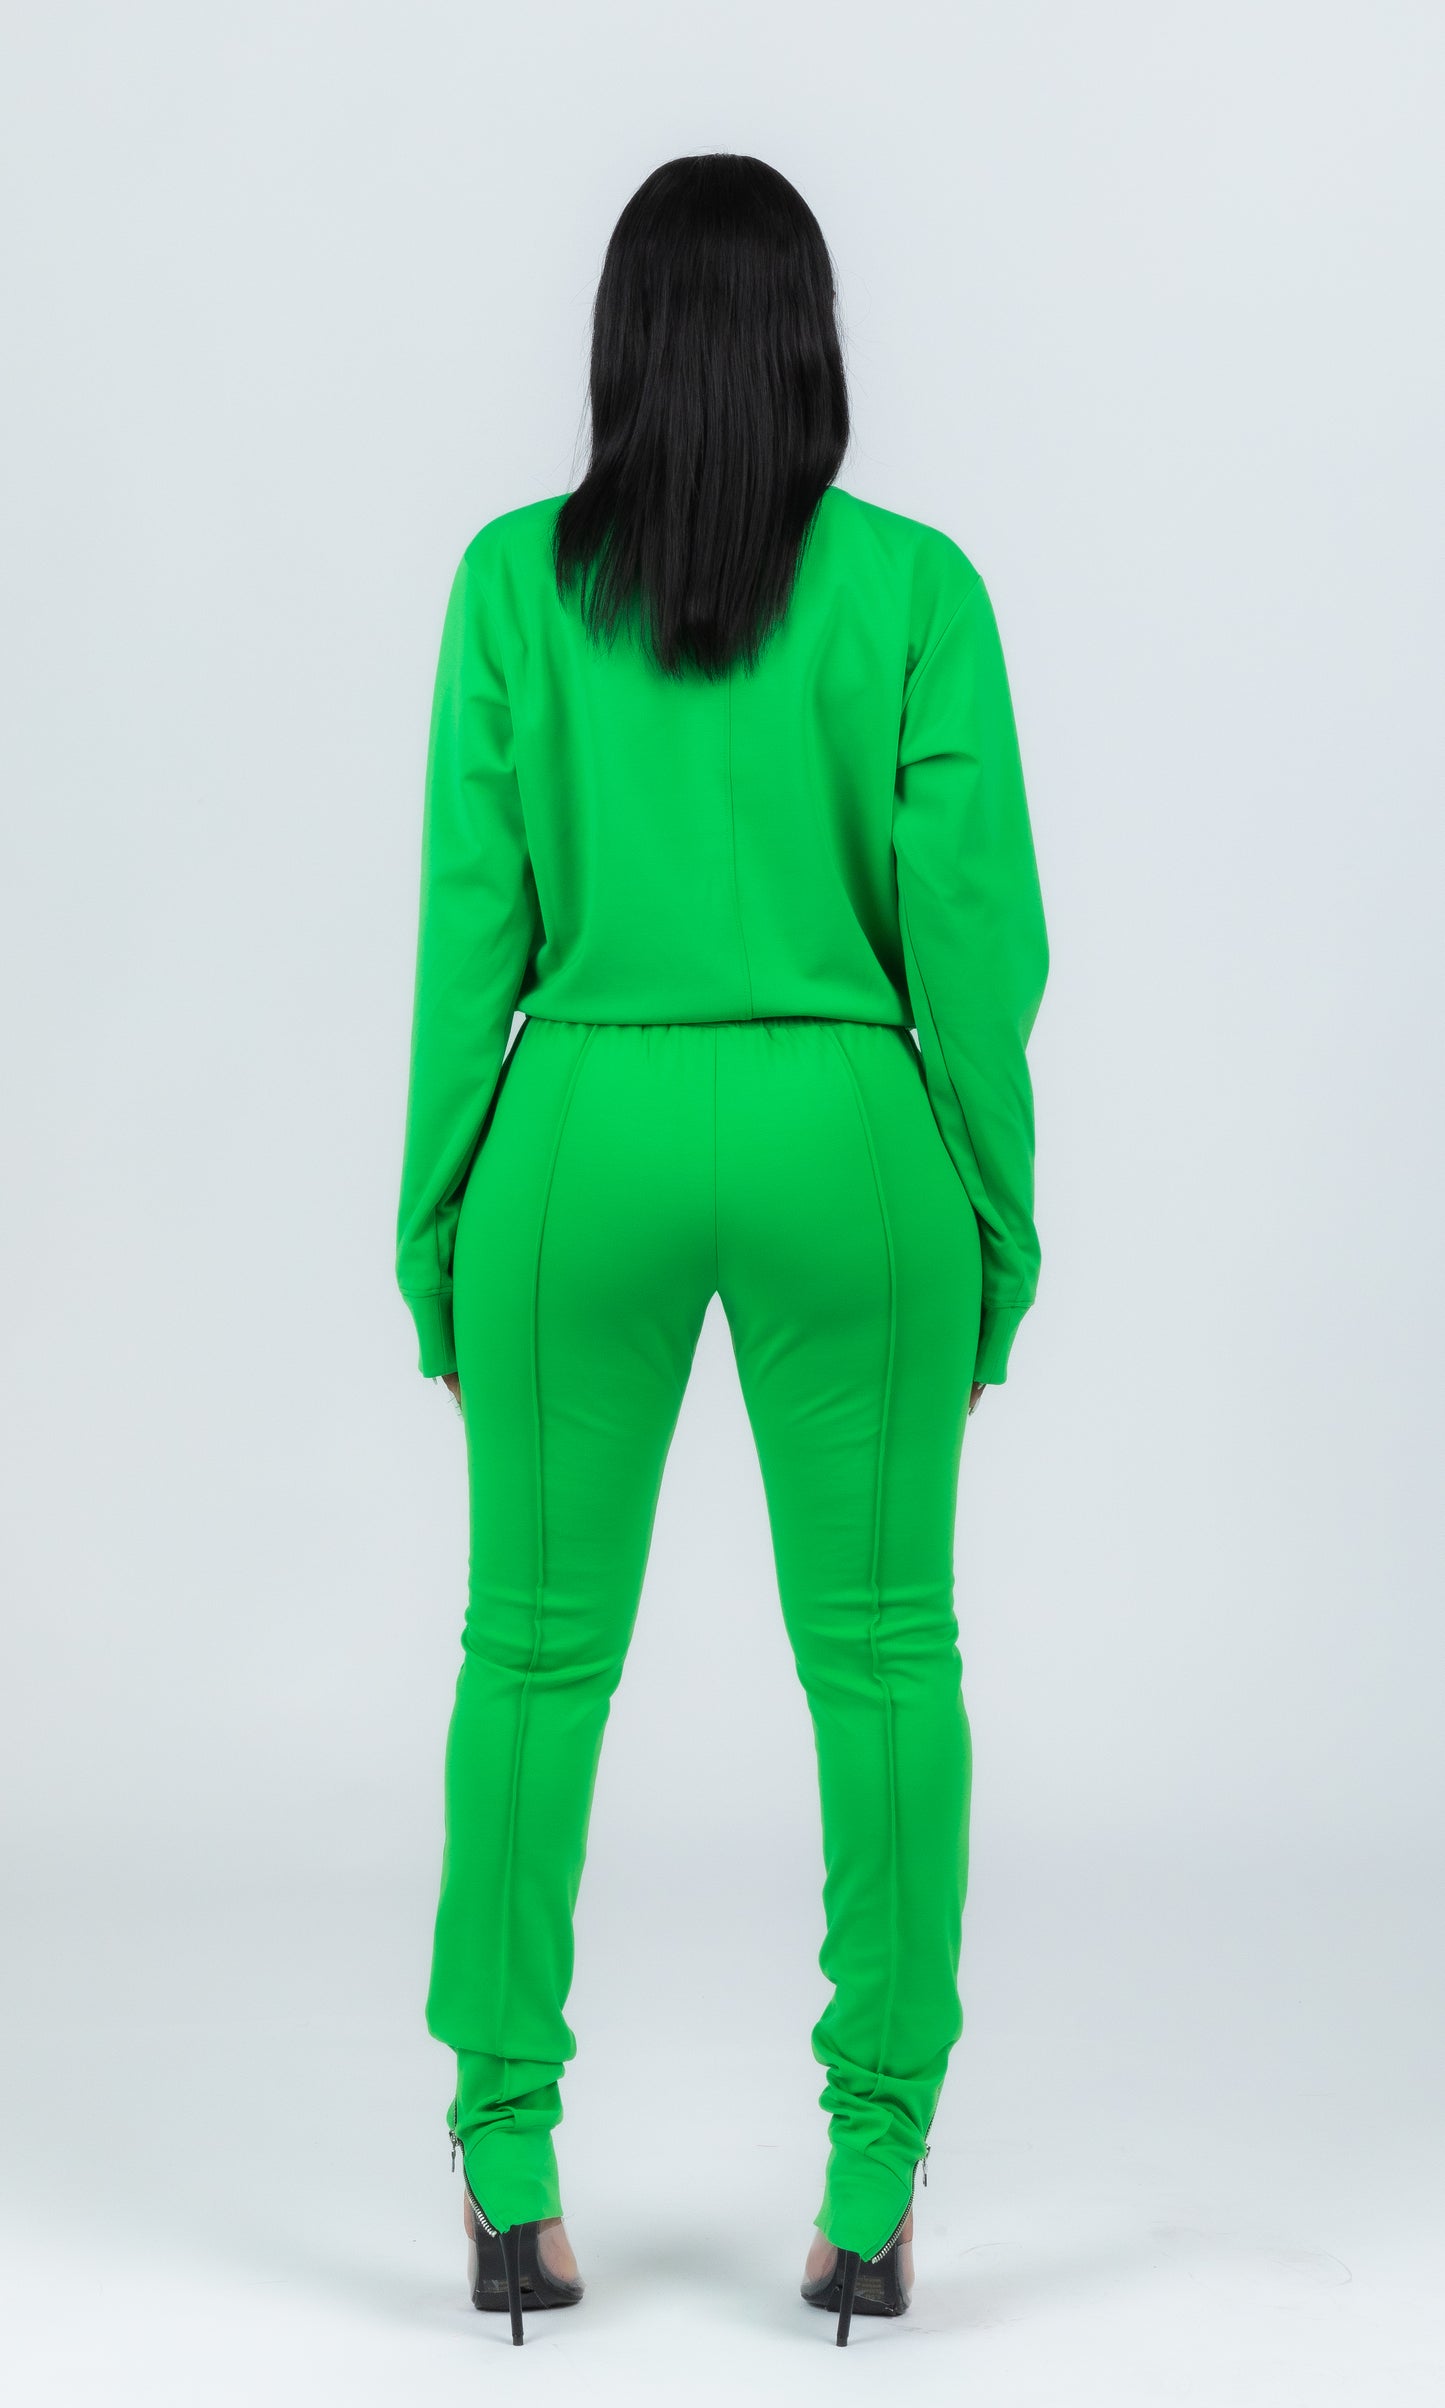 Gorilla Wear Pixley, Light Green - Stylish Women Sweatpants For Lounge, UAE Online Shopping For Sportswear & Gym Training Accessories